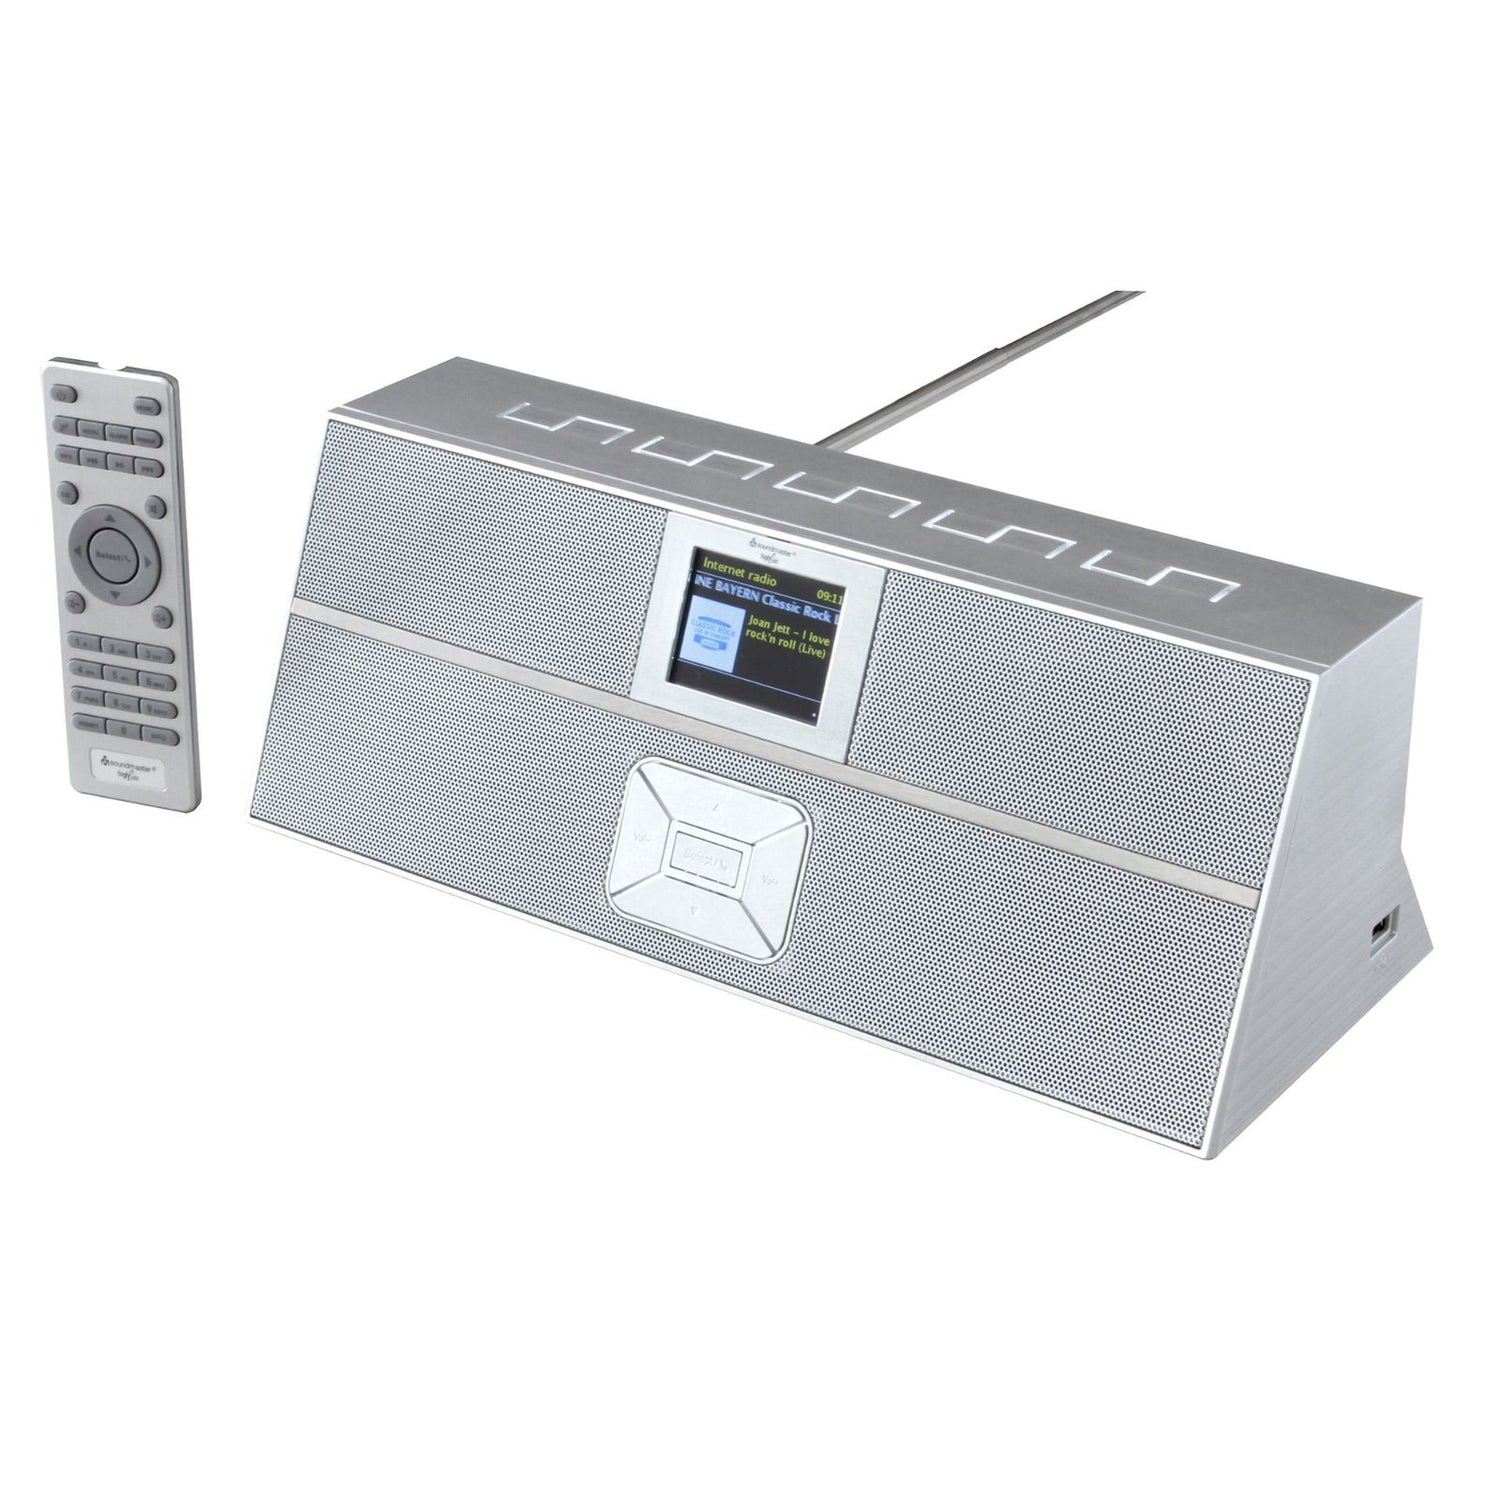 Soundmaster Eliteline IR3300SI Internetradio DAB+ Digitalradio Netzwerkplayer UKW Radio USB Bluetooth Alexa fähig